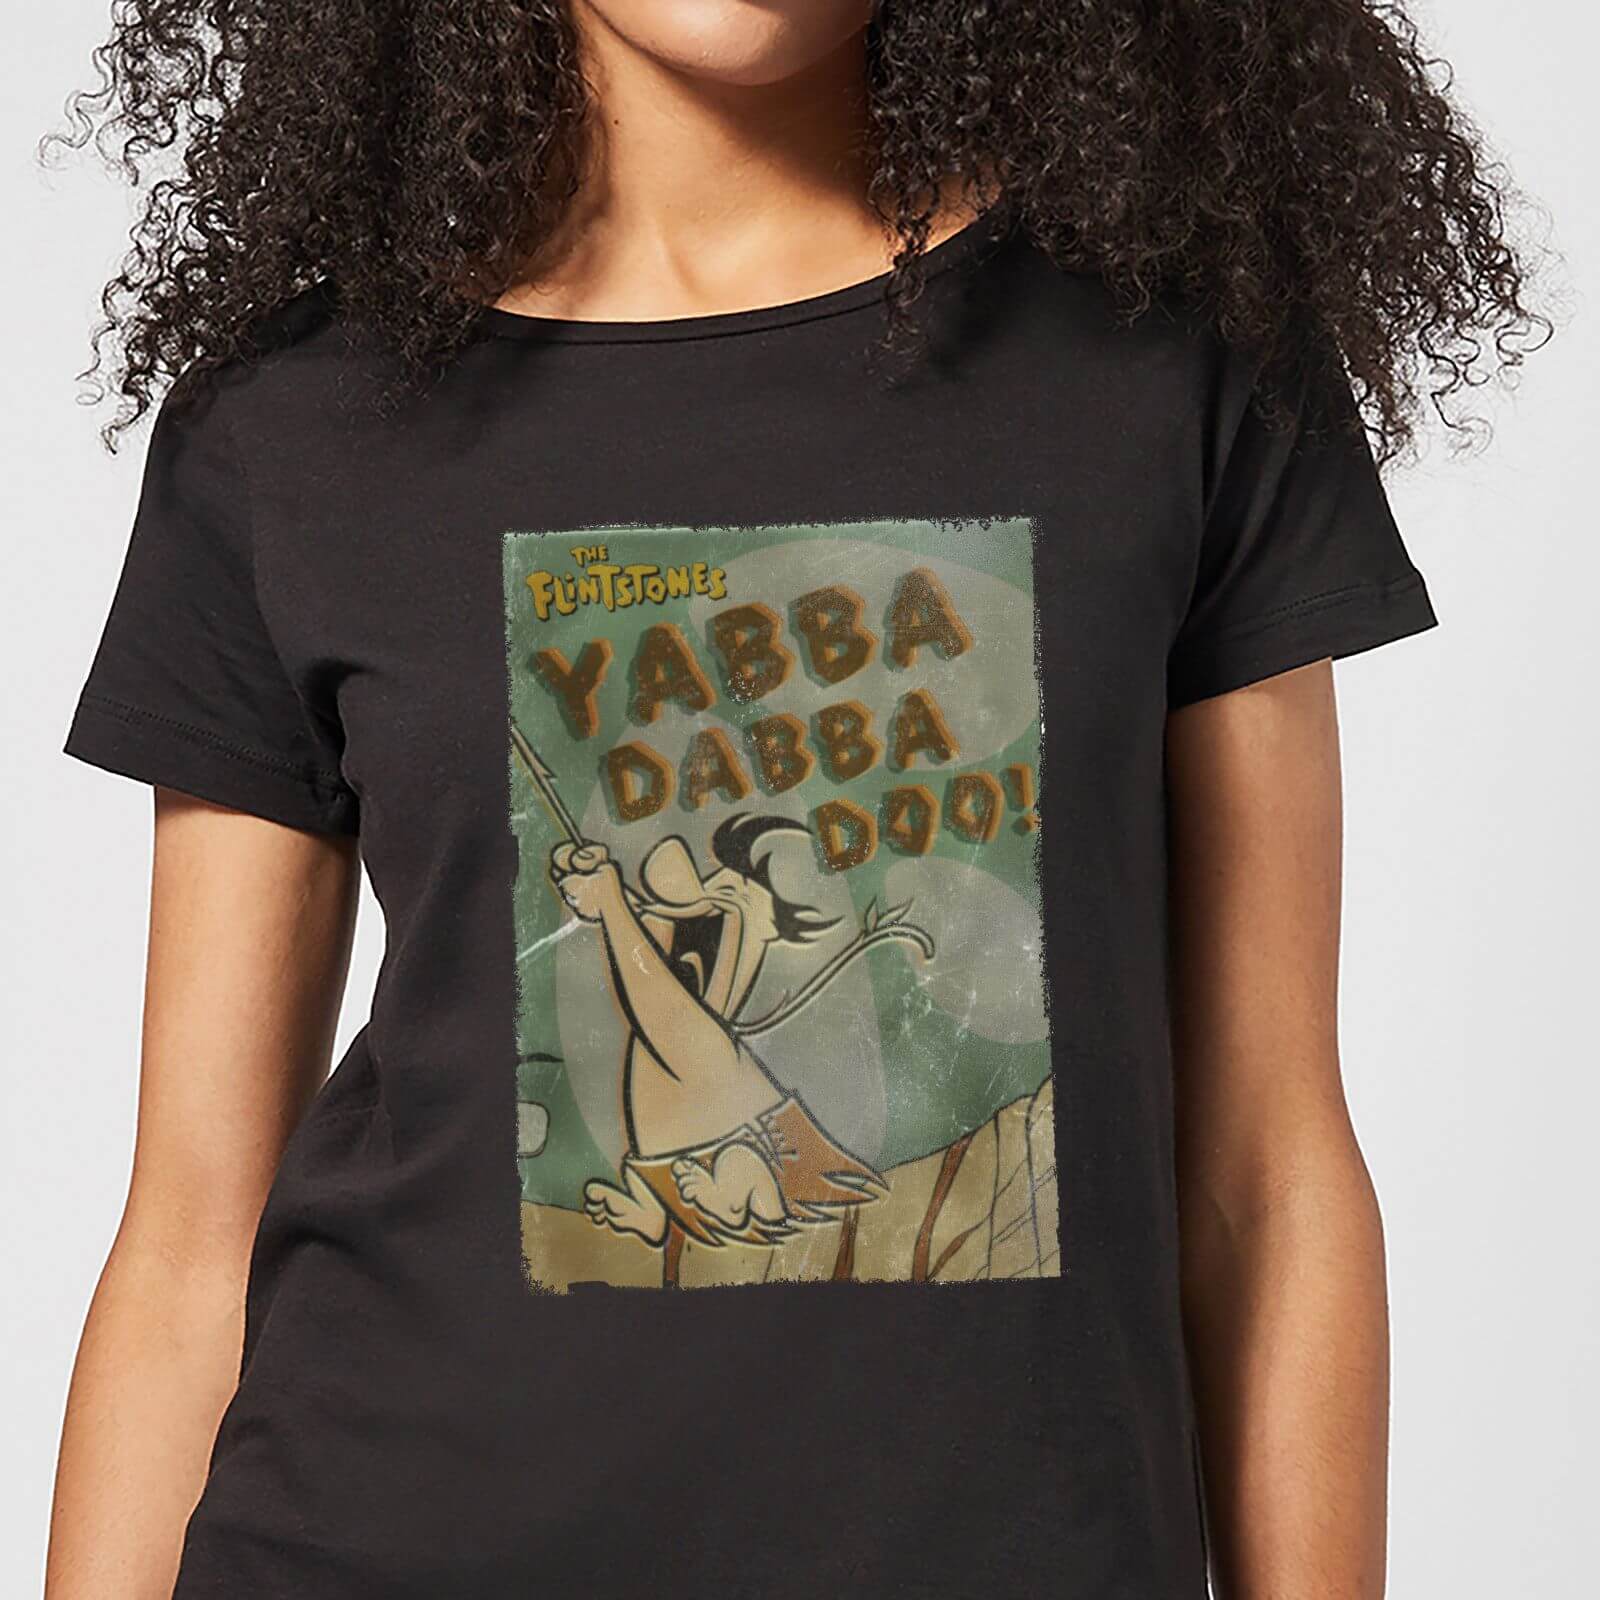 The Flintstones Yabba Dabba Doo! Women's T-Shirt - Black - S - Black